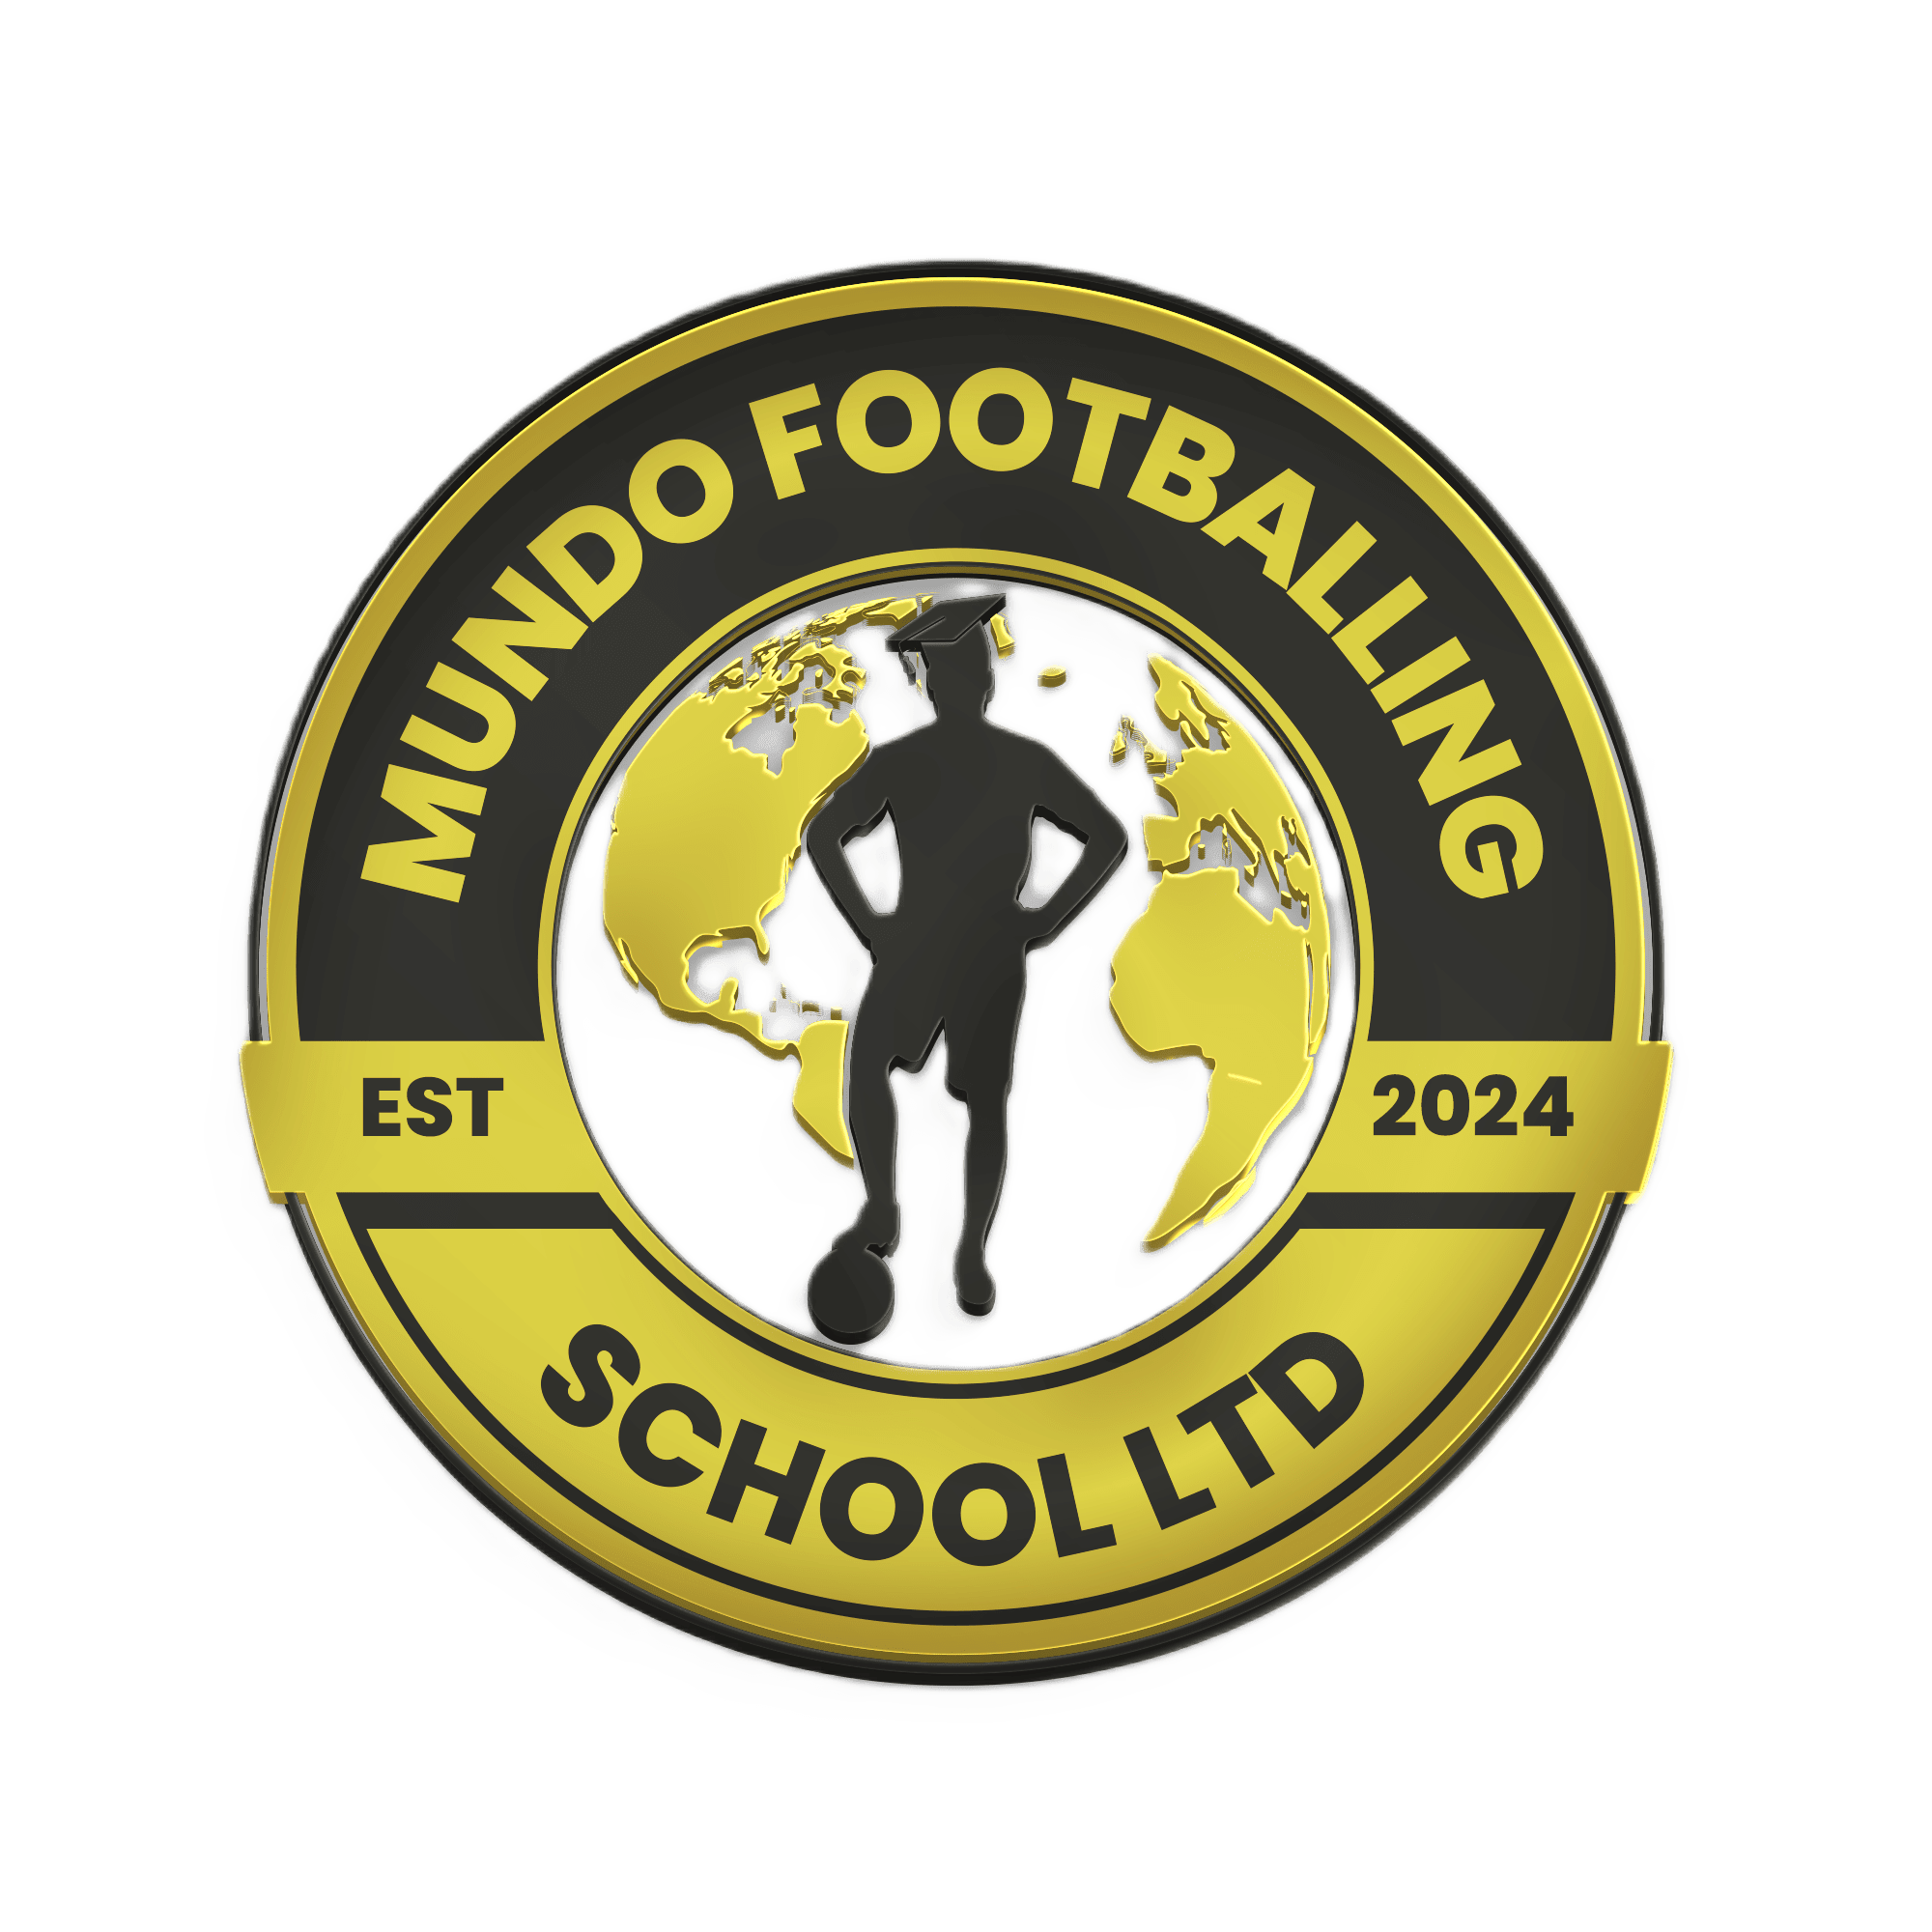 Images Mundo Footballing School Ltd